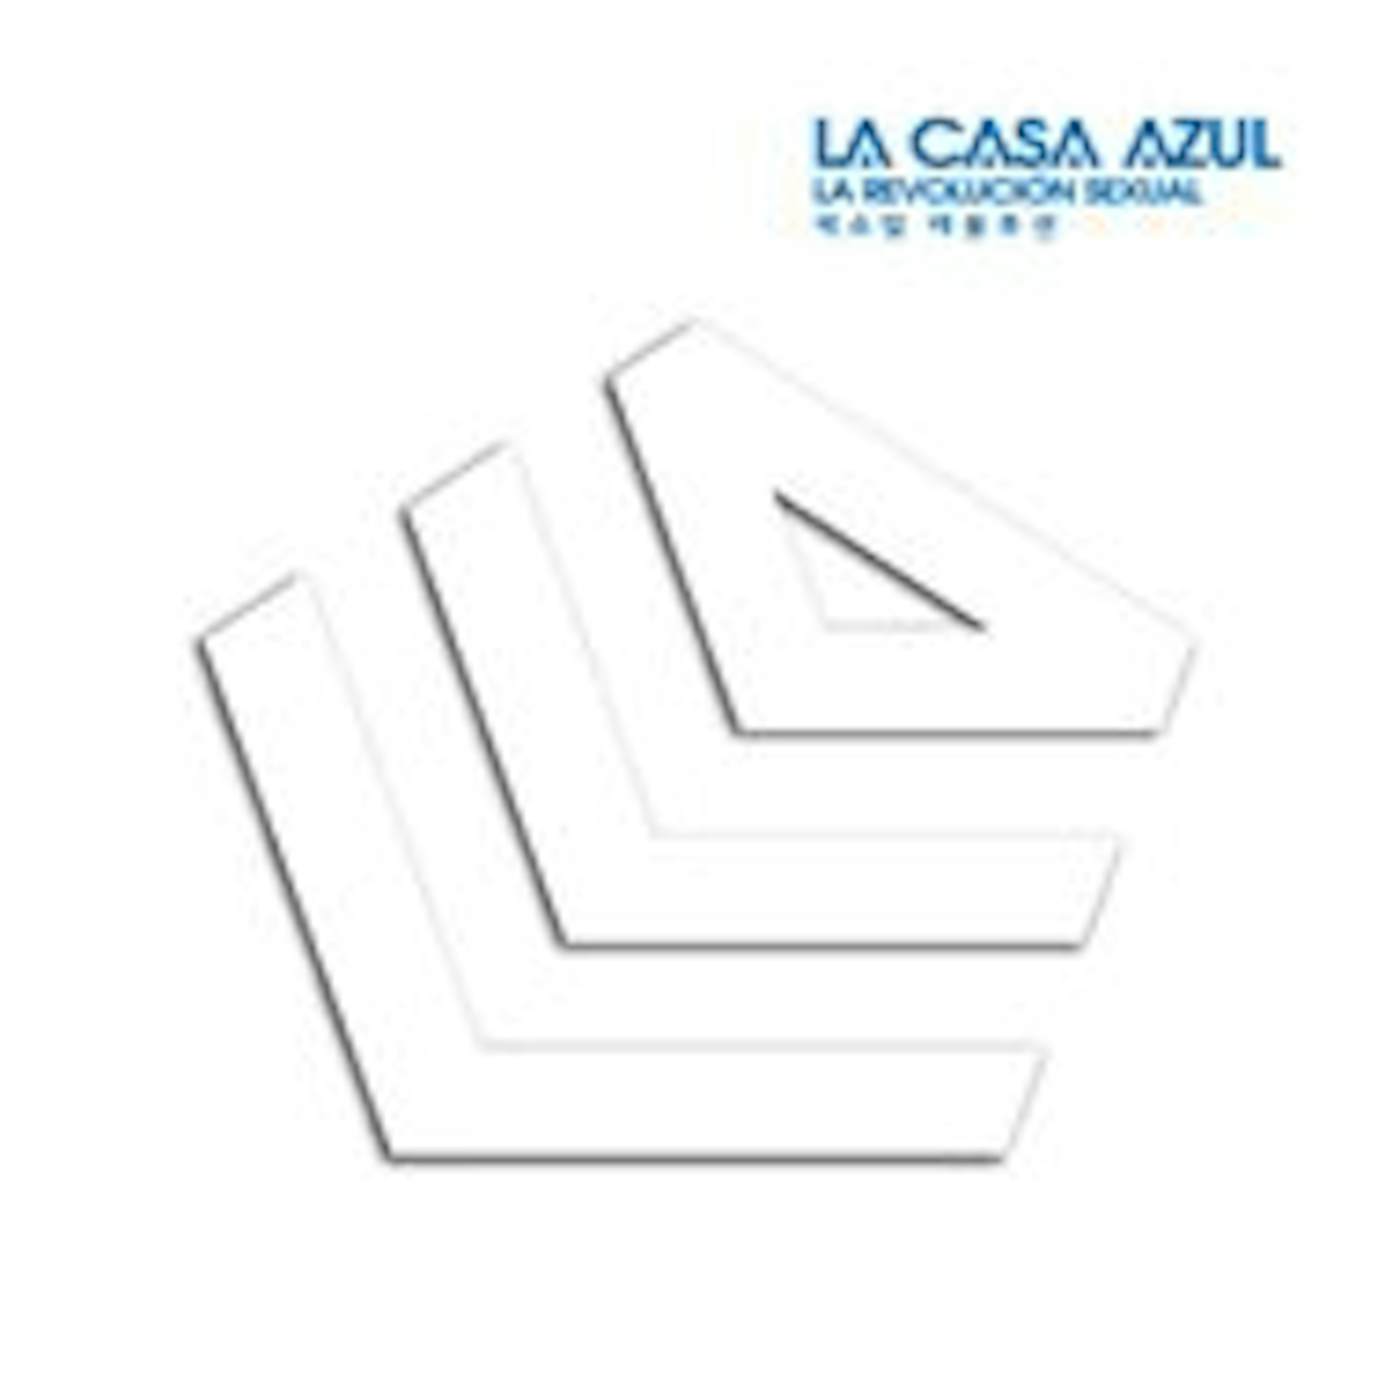 La Casa Azul LA REVOLUCION SEXUAL CD